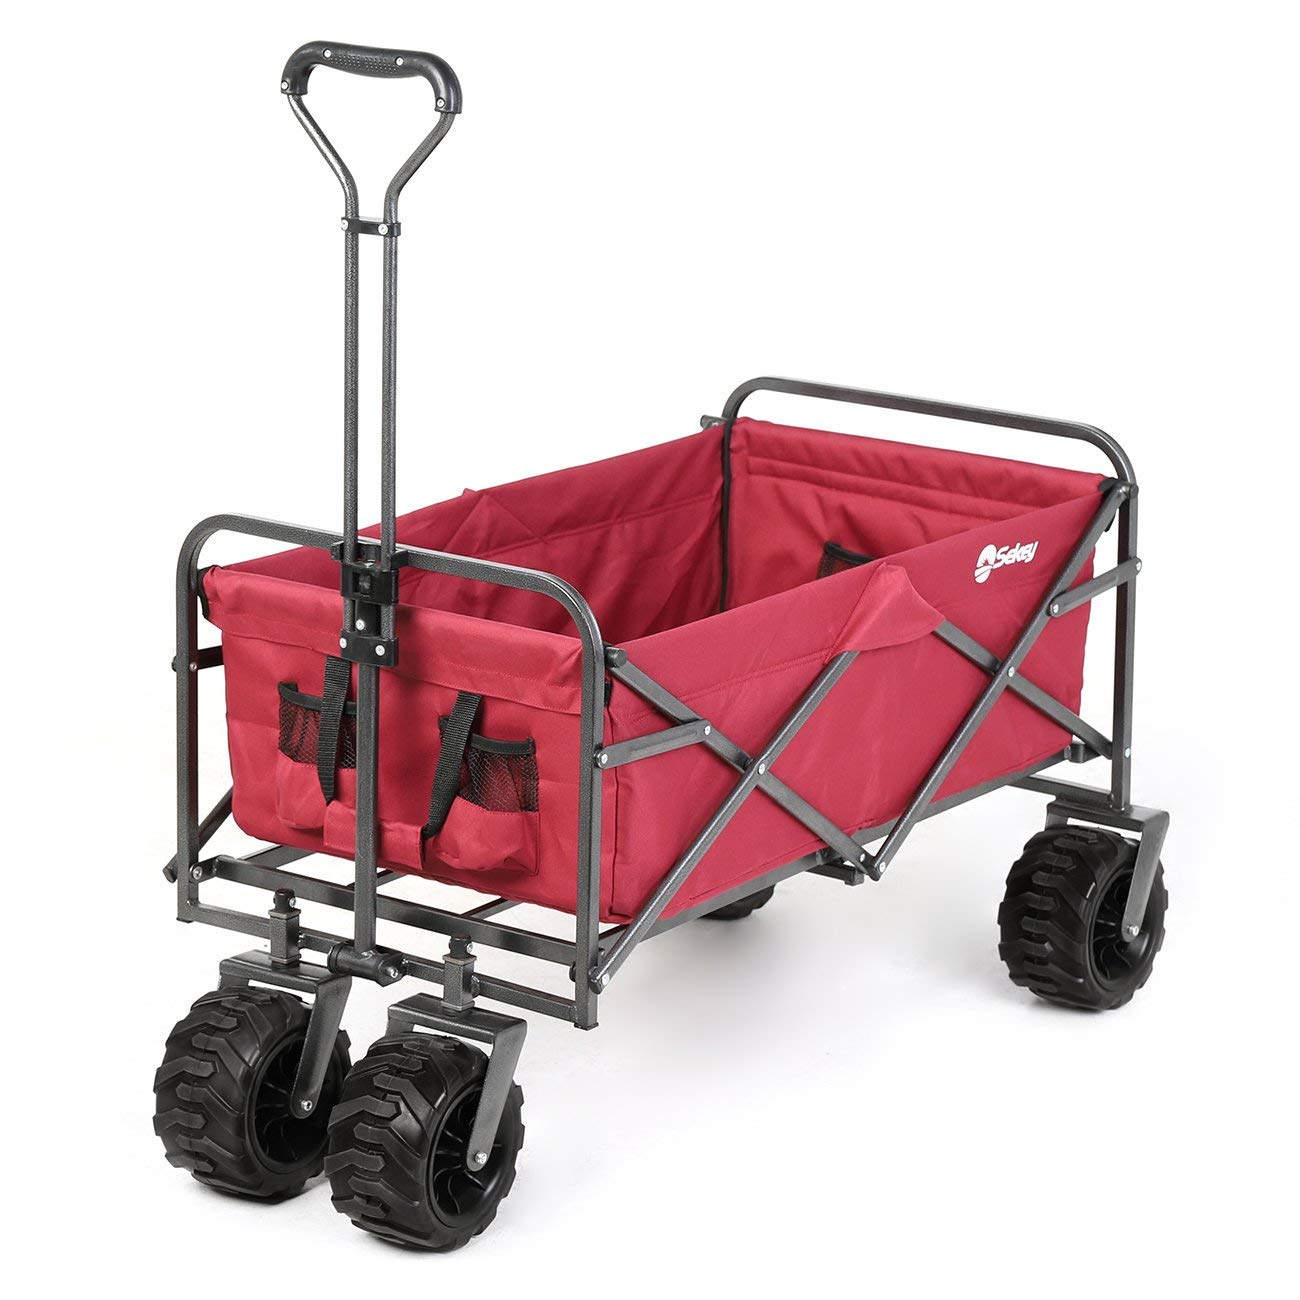 Sekey Folding Wagon Cart Collapsible Outdoor Utility Wagon Garden Shopping Cart Beach Wagon with All-Terrain Wheels, 265 Pound Capacity, Red